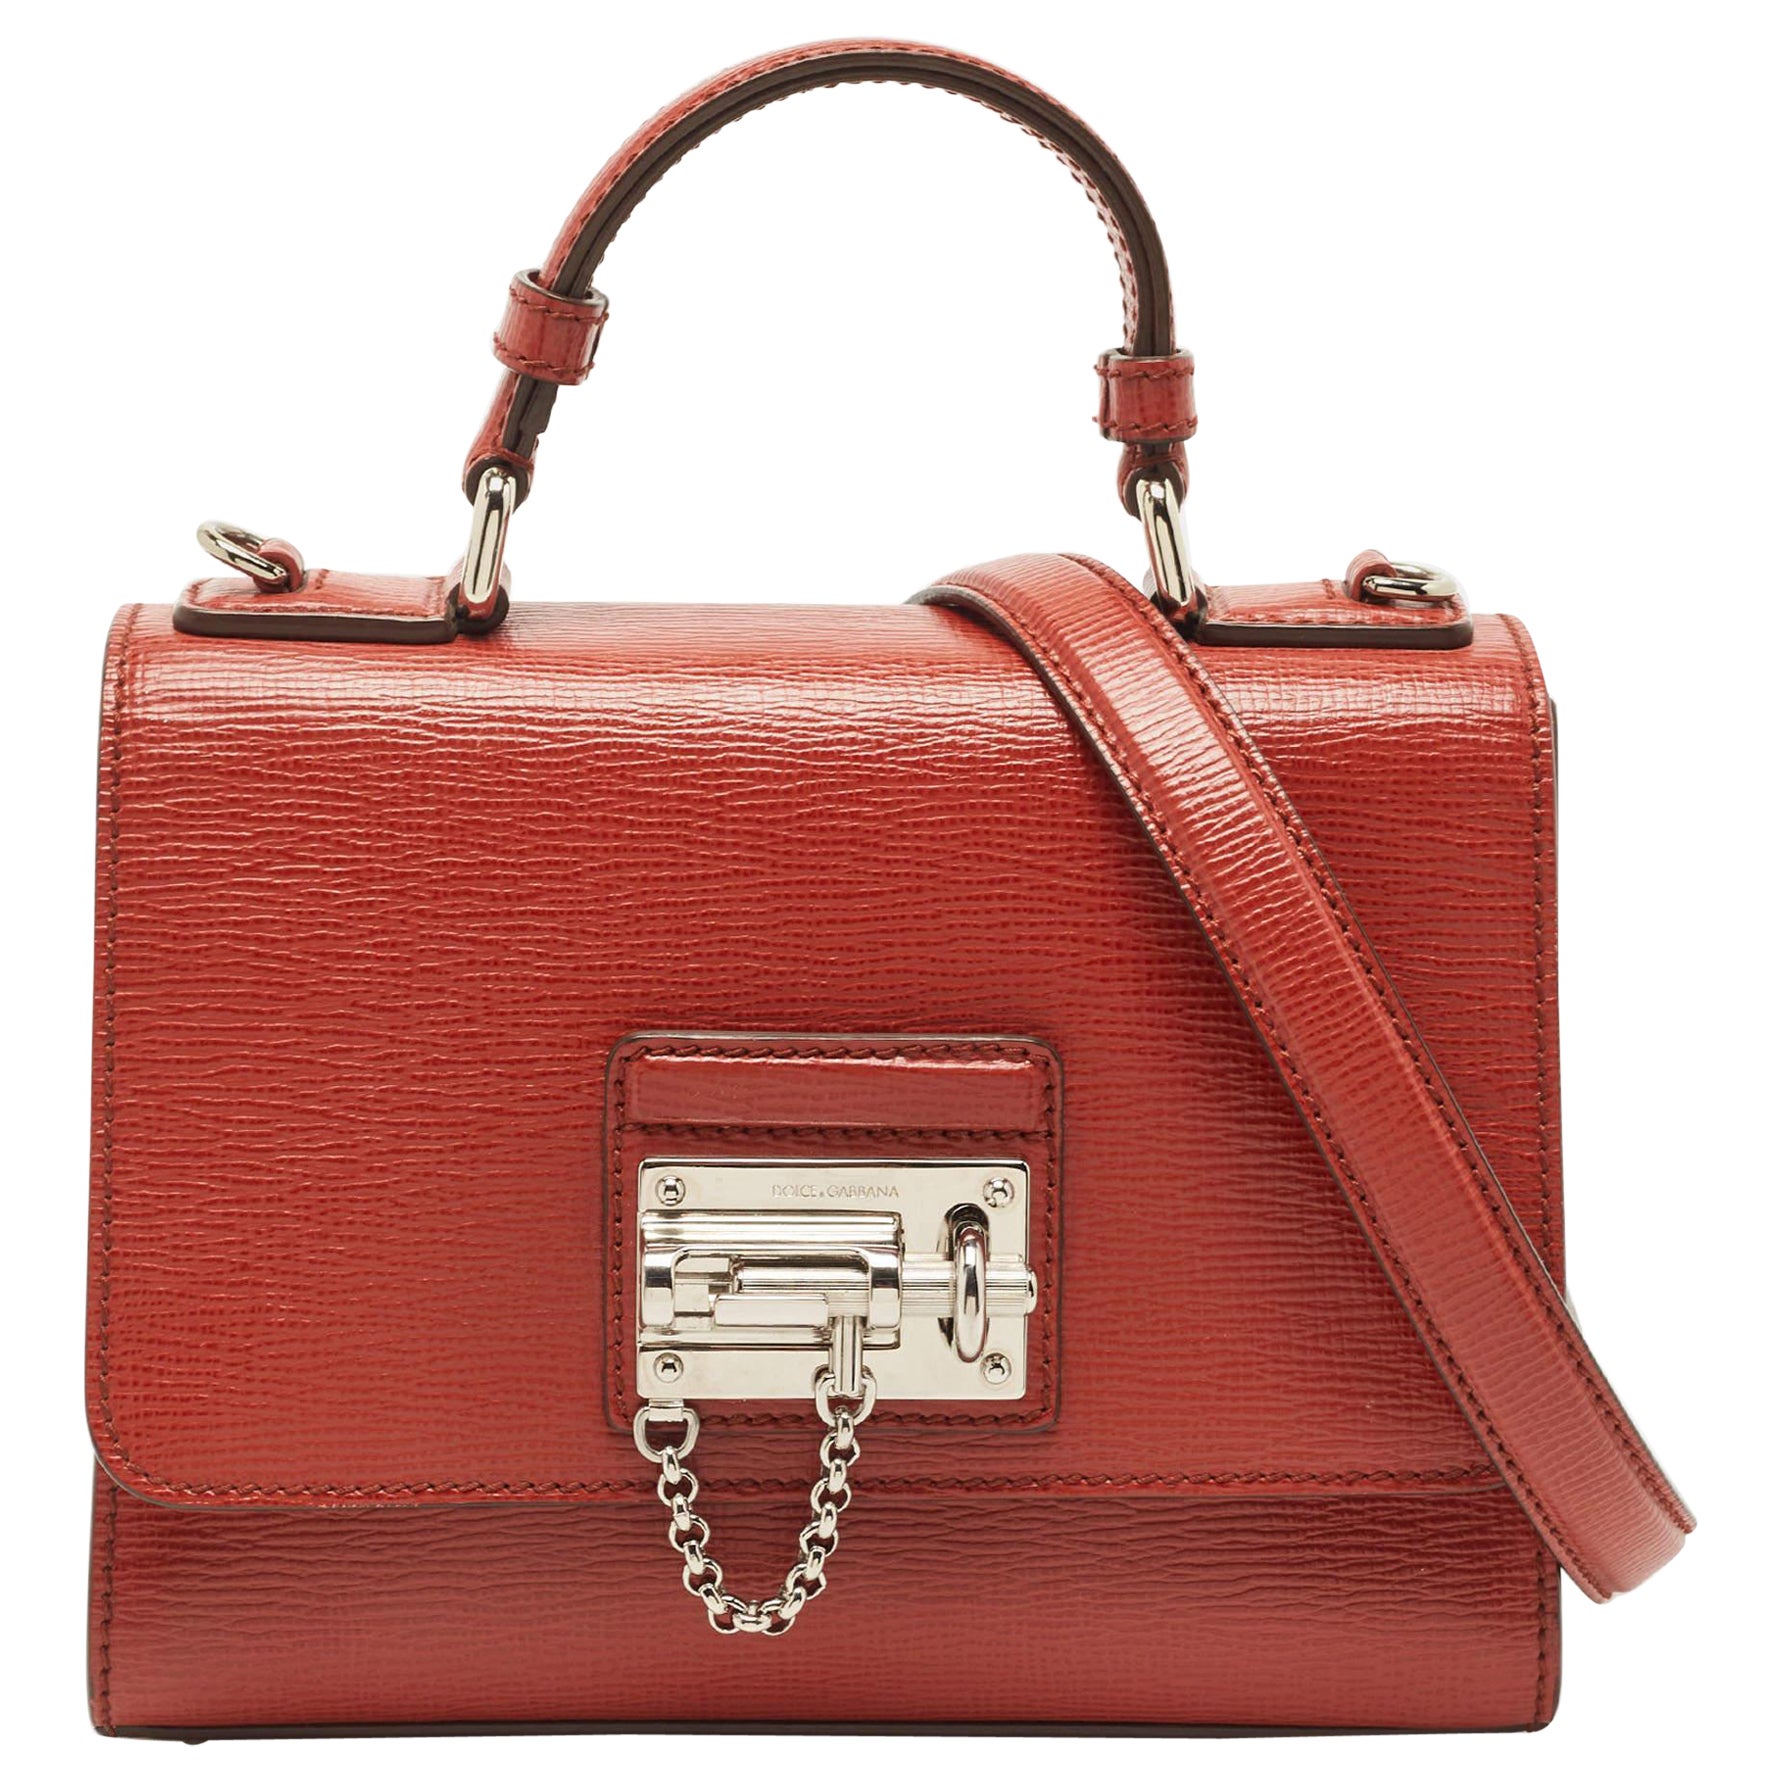 Dolce & Gabbana Small 'sicily' Bag in Brown